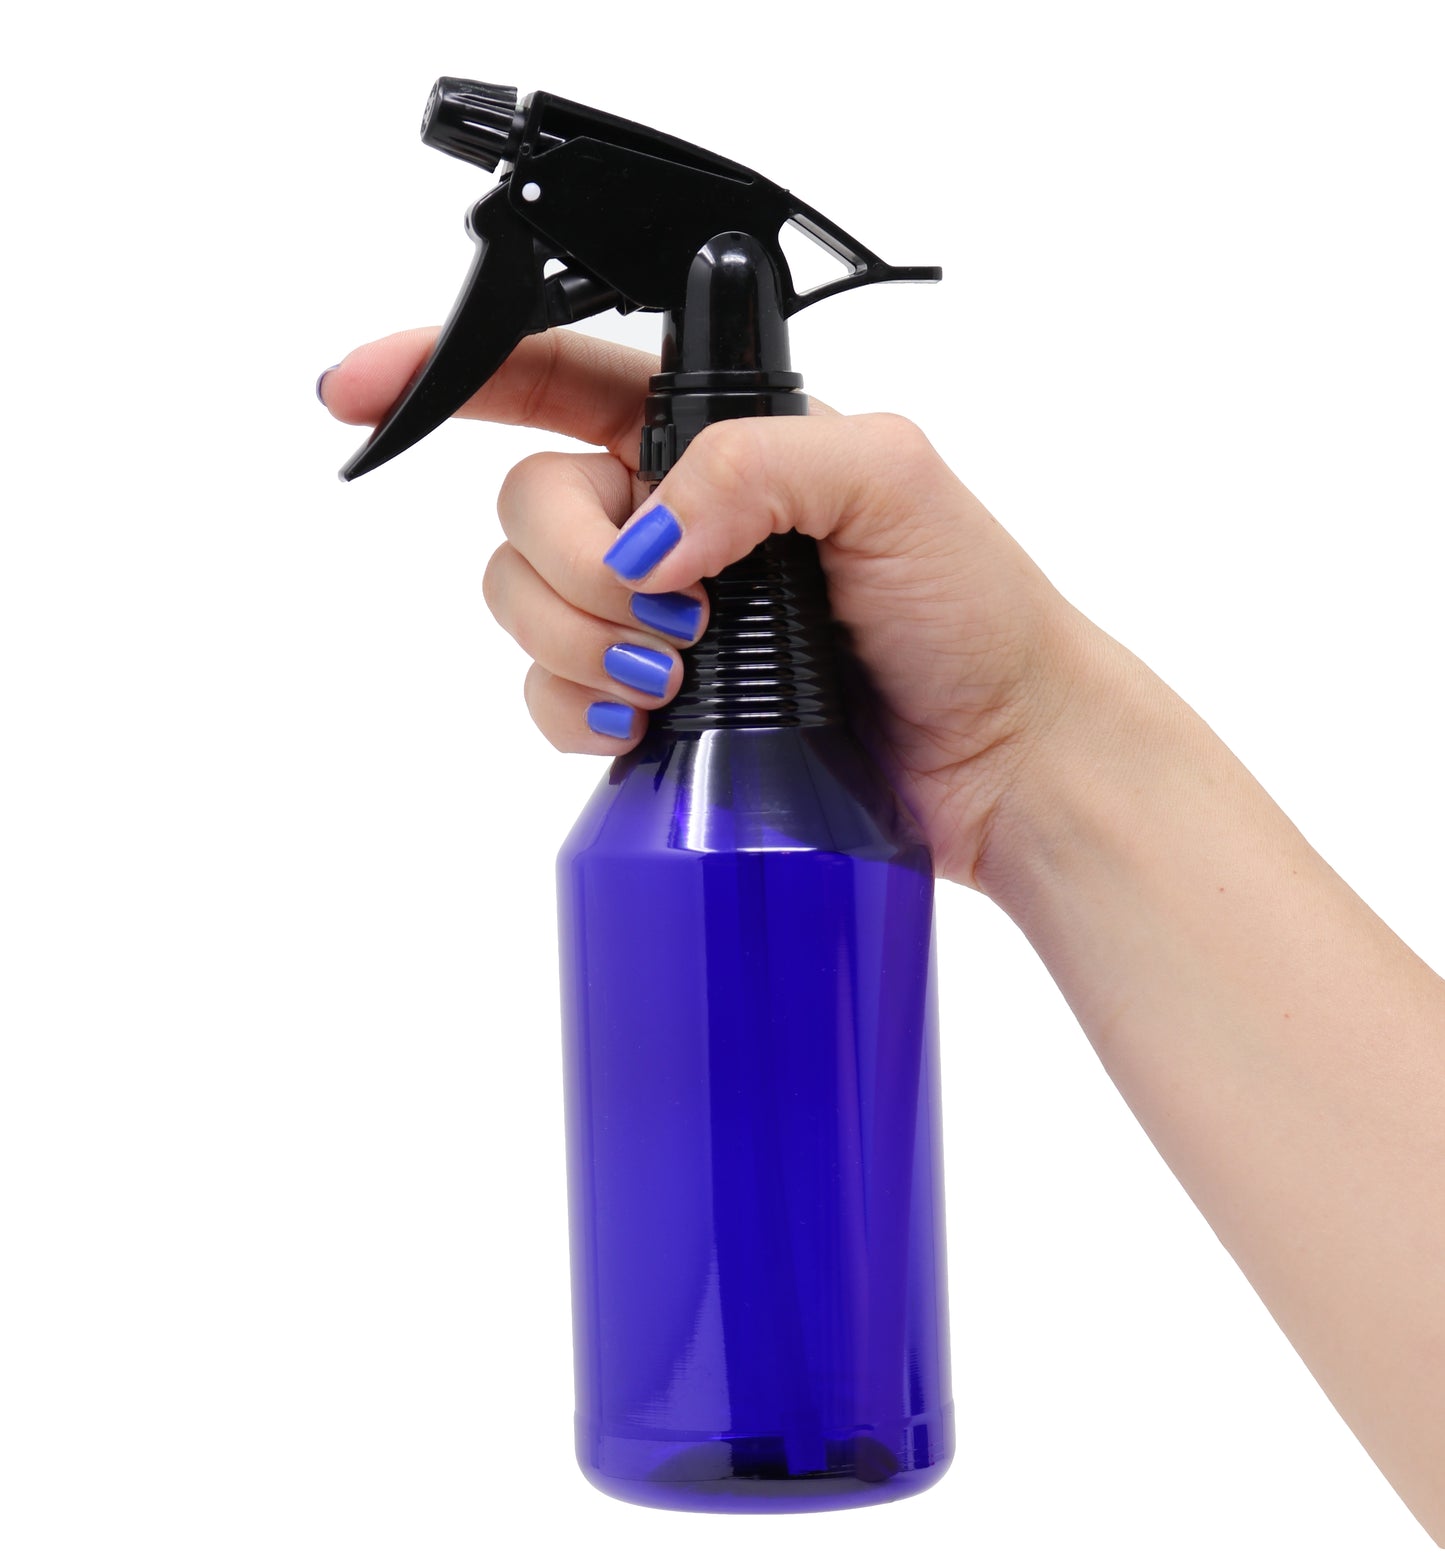 Water Spray Bottle 12 oz for Hair Salon at